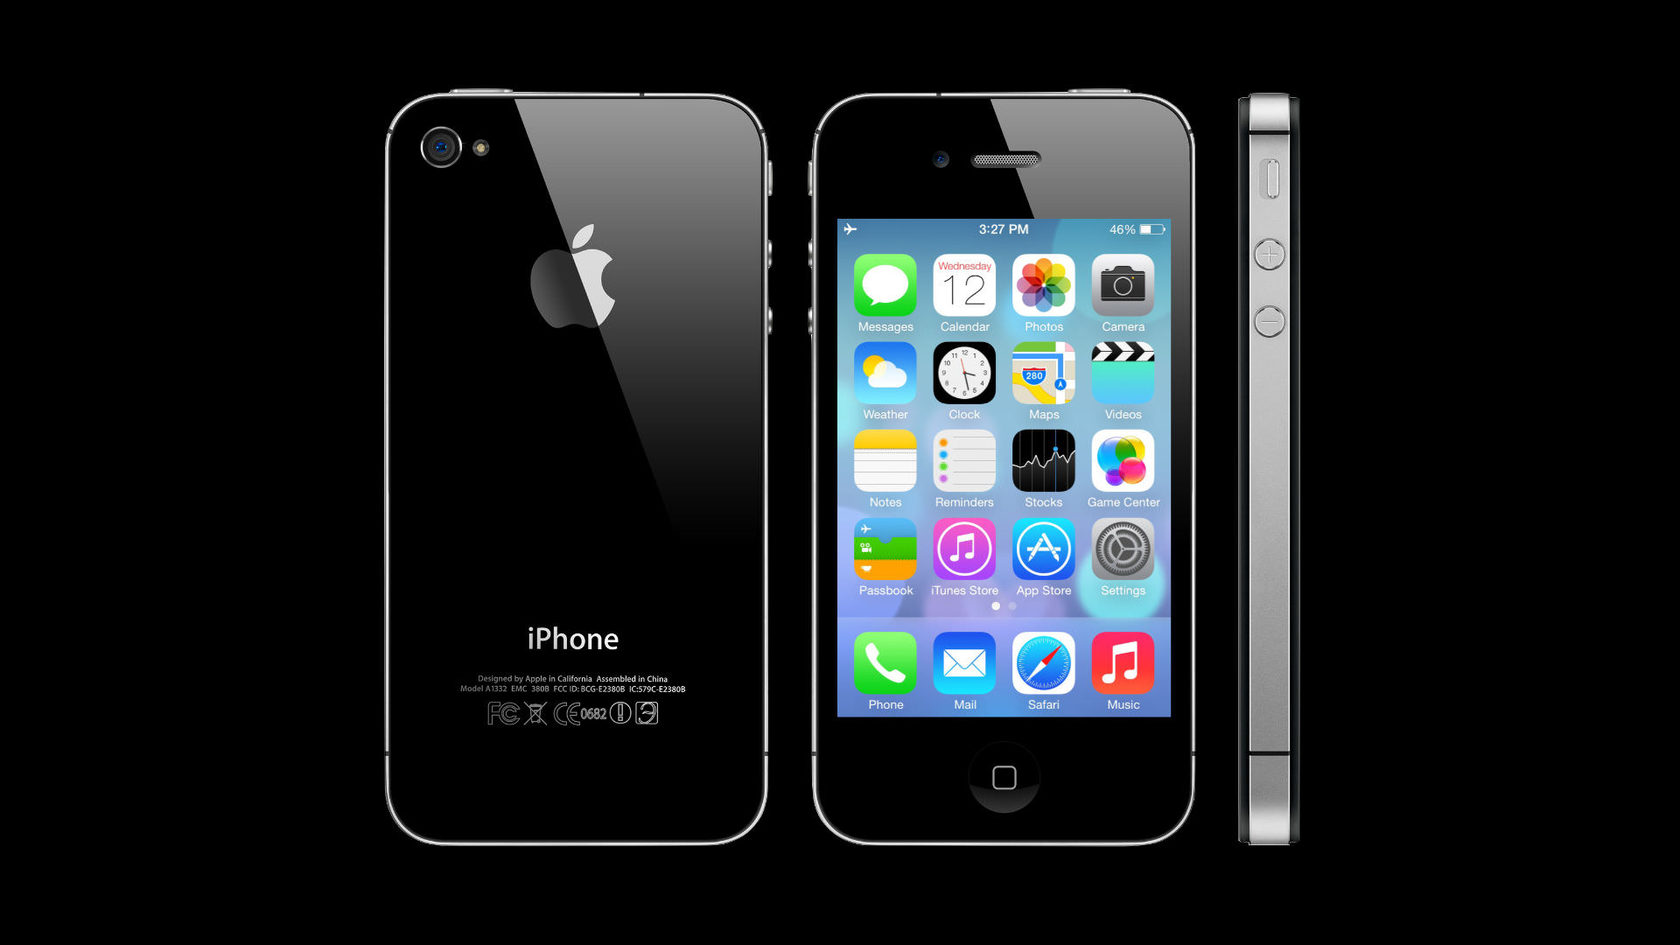 Айфон 4 джи. Iphone 4s. Айфон 4g. Iphone 4. Iphone 4s (2011).